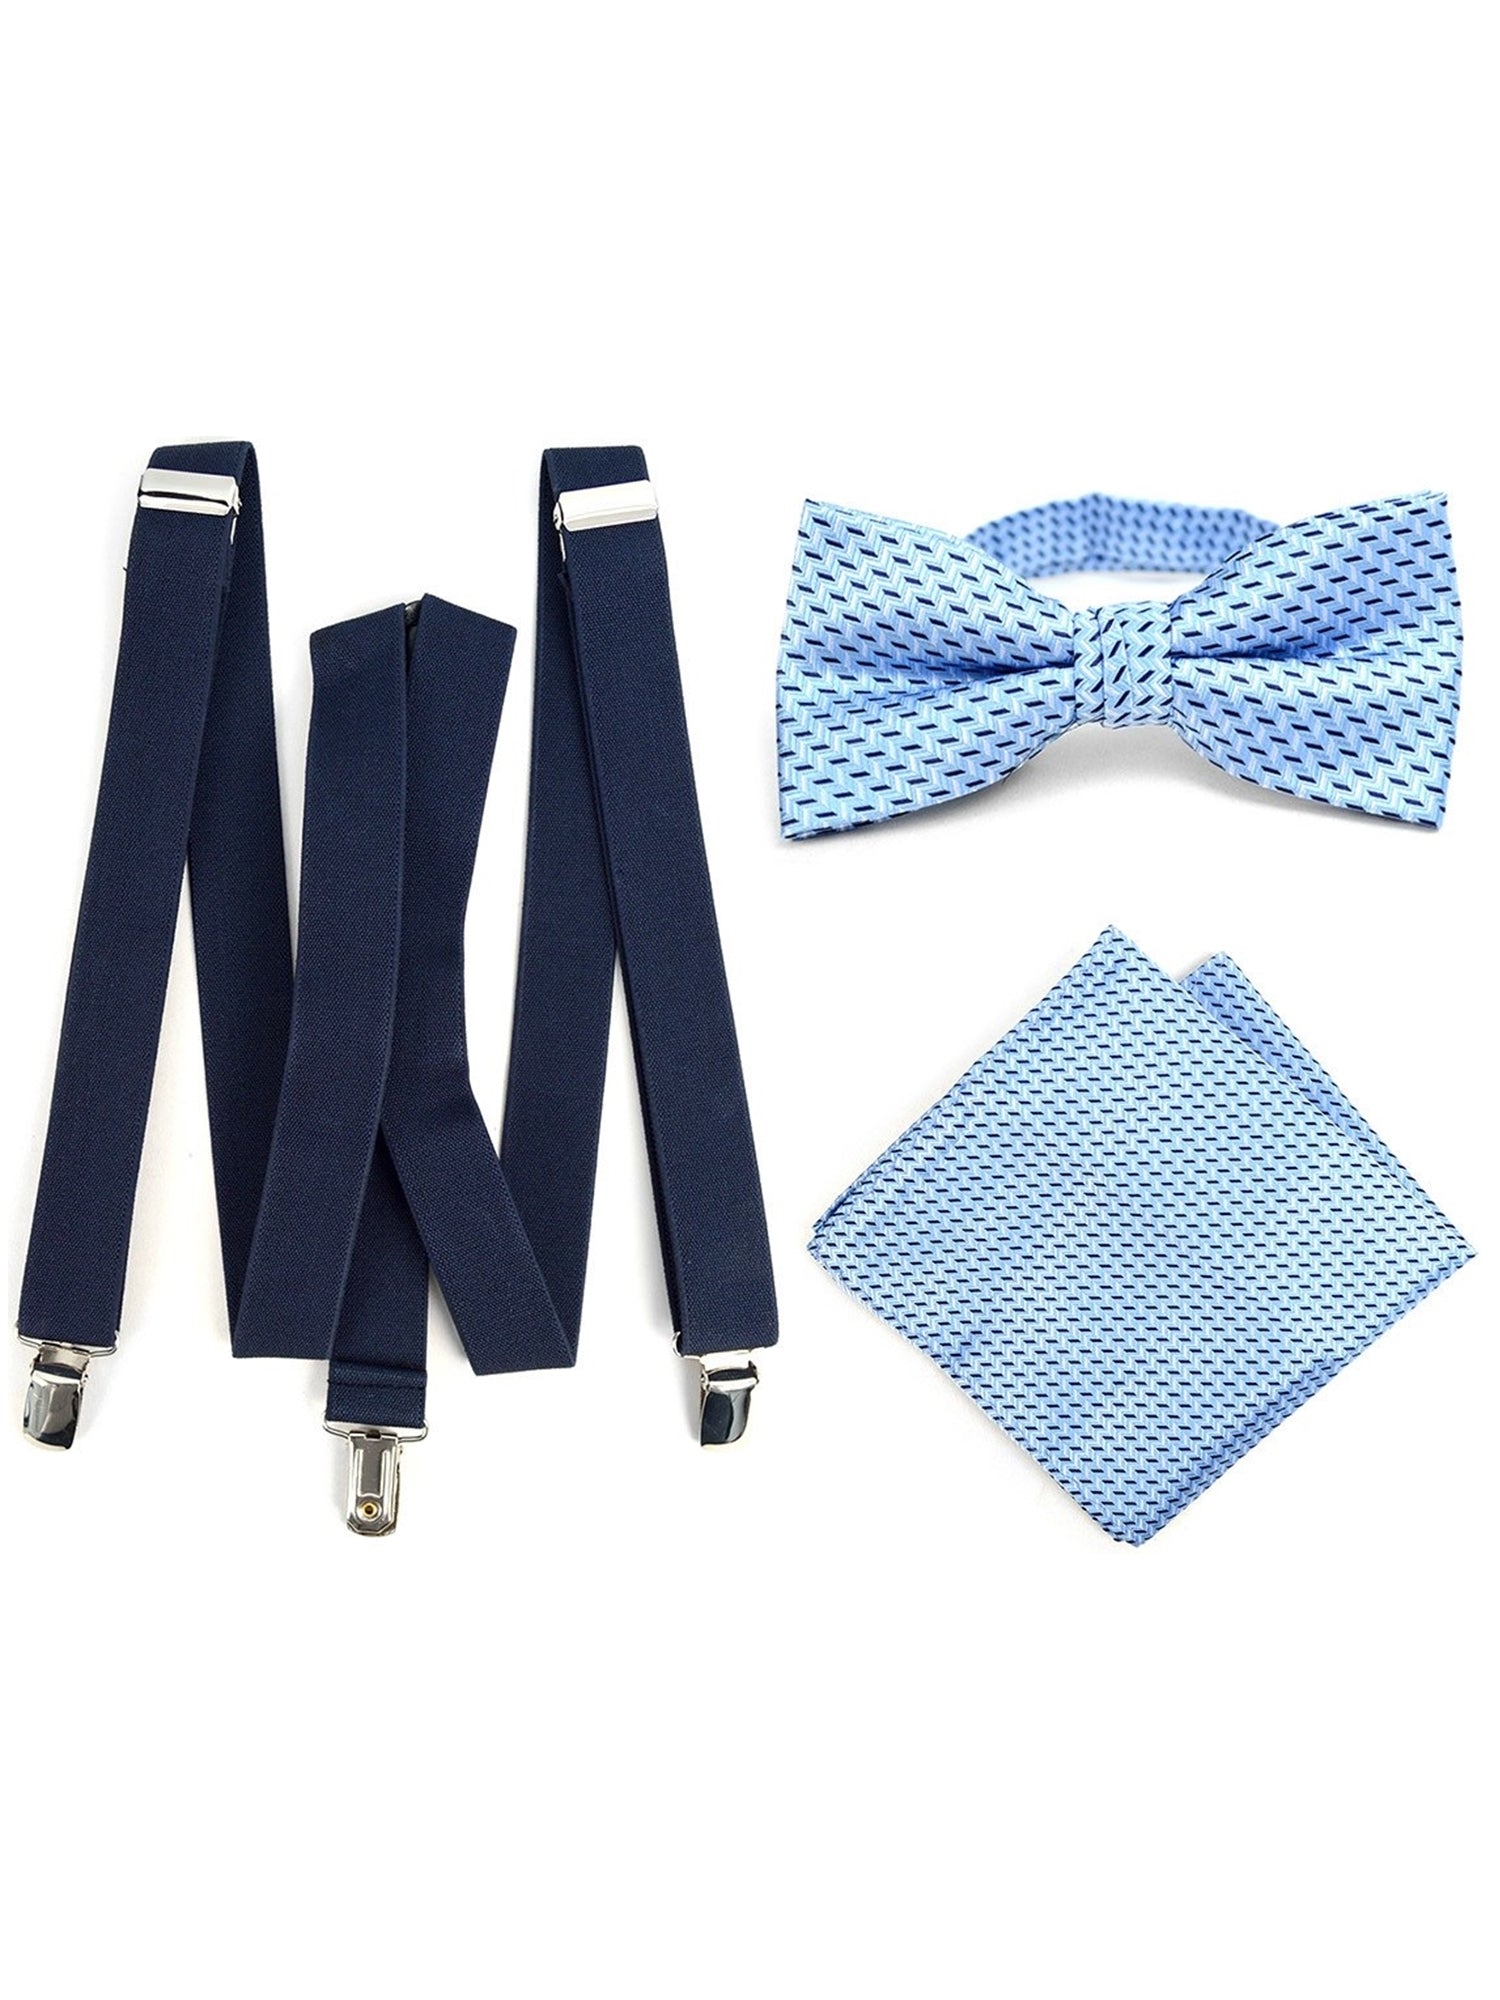 Men's Navy Blue 3 PC Clip-on Suspenders, Bow Tie & Hanky Sets Men's Solid Color Bow Tie TheDapperTie Navy Blue # 7 Regular 